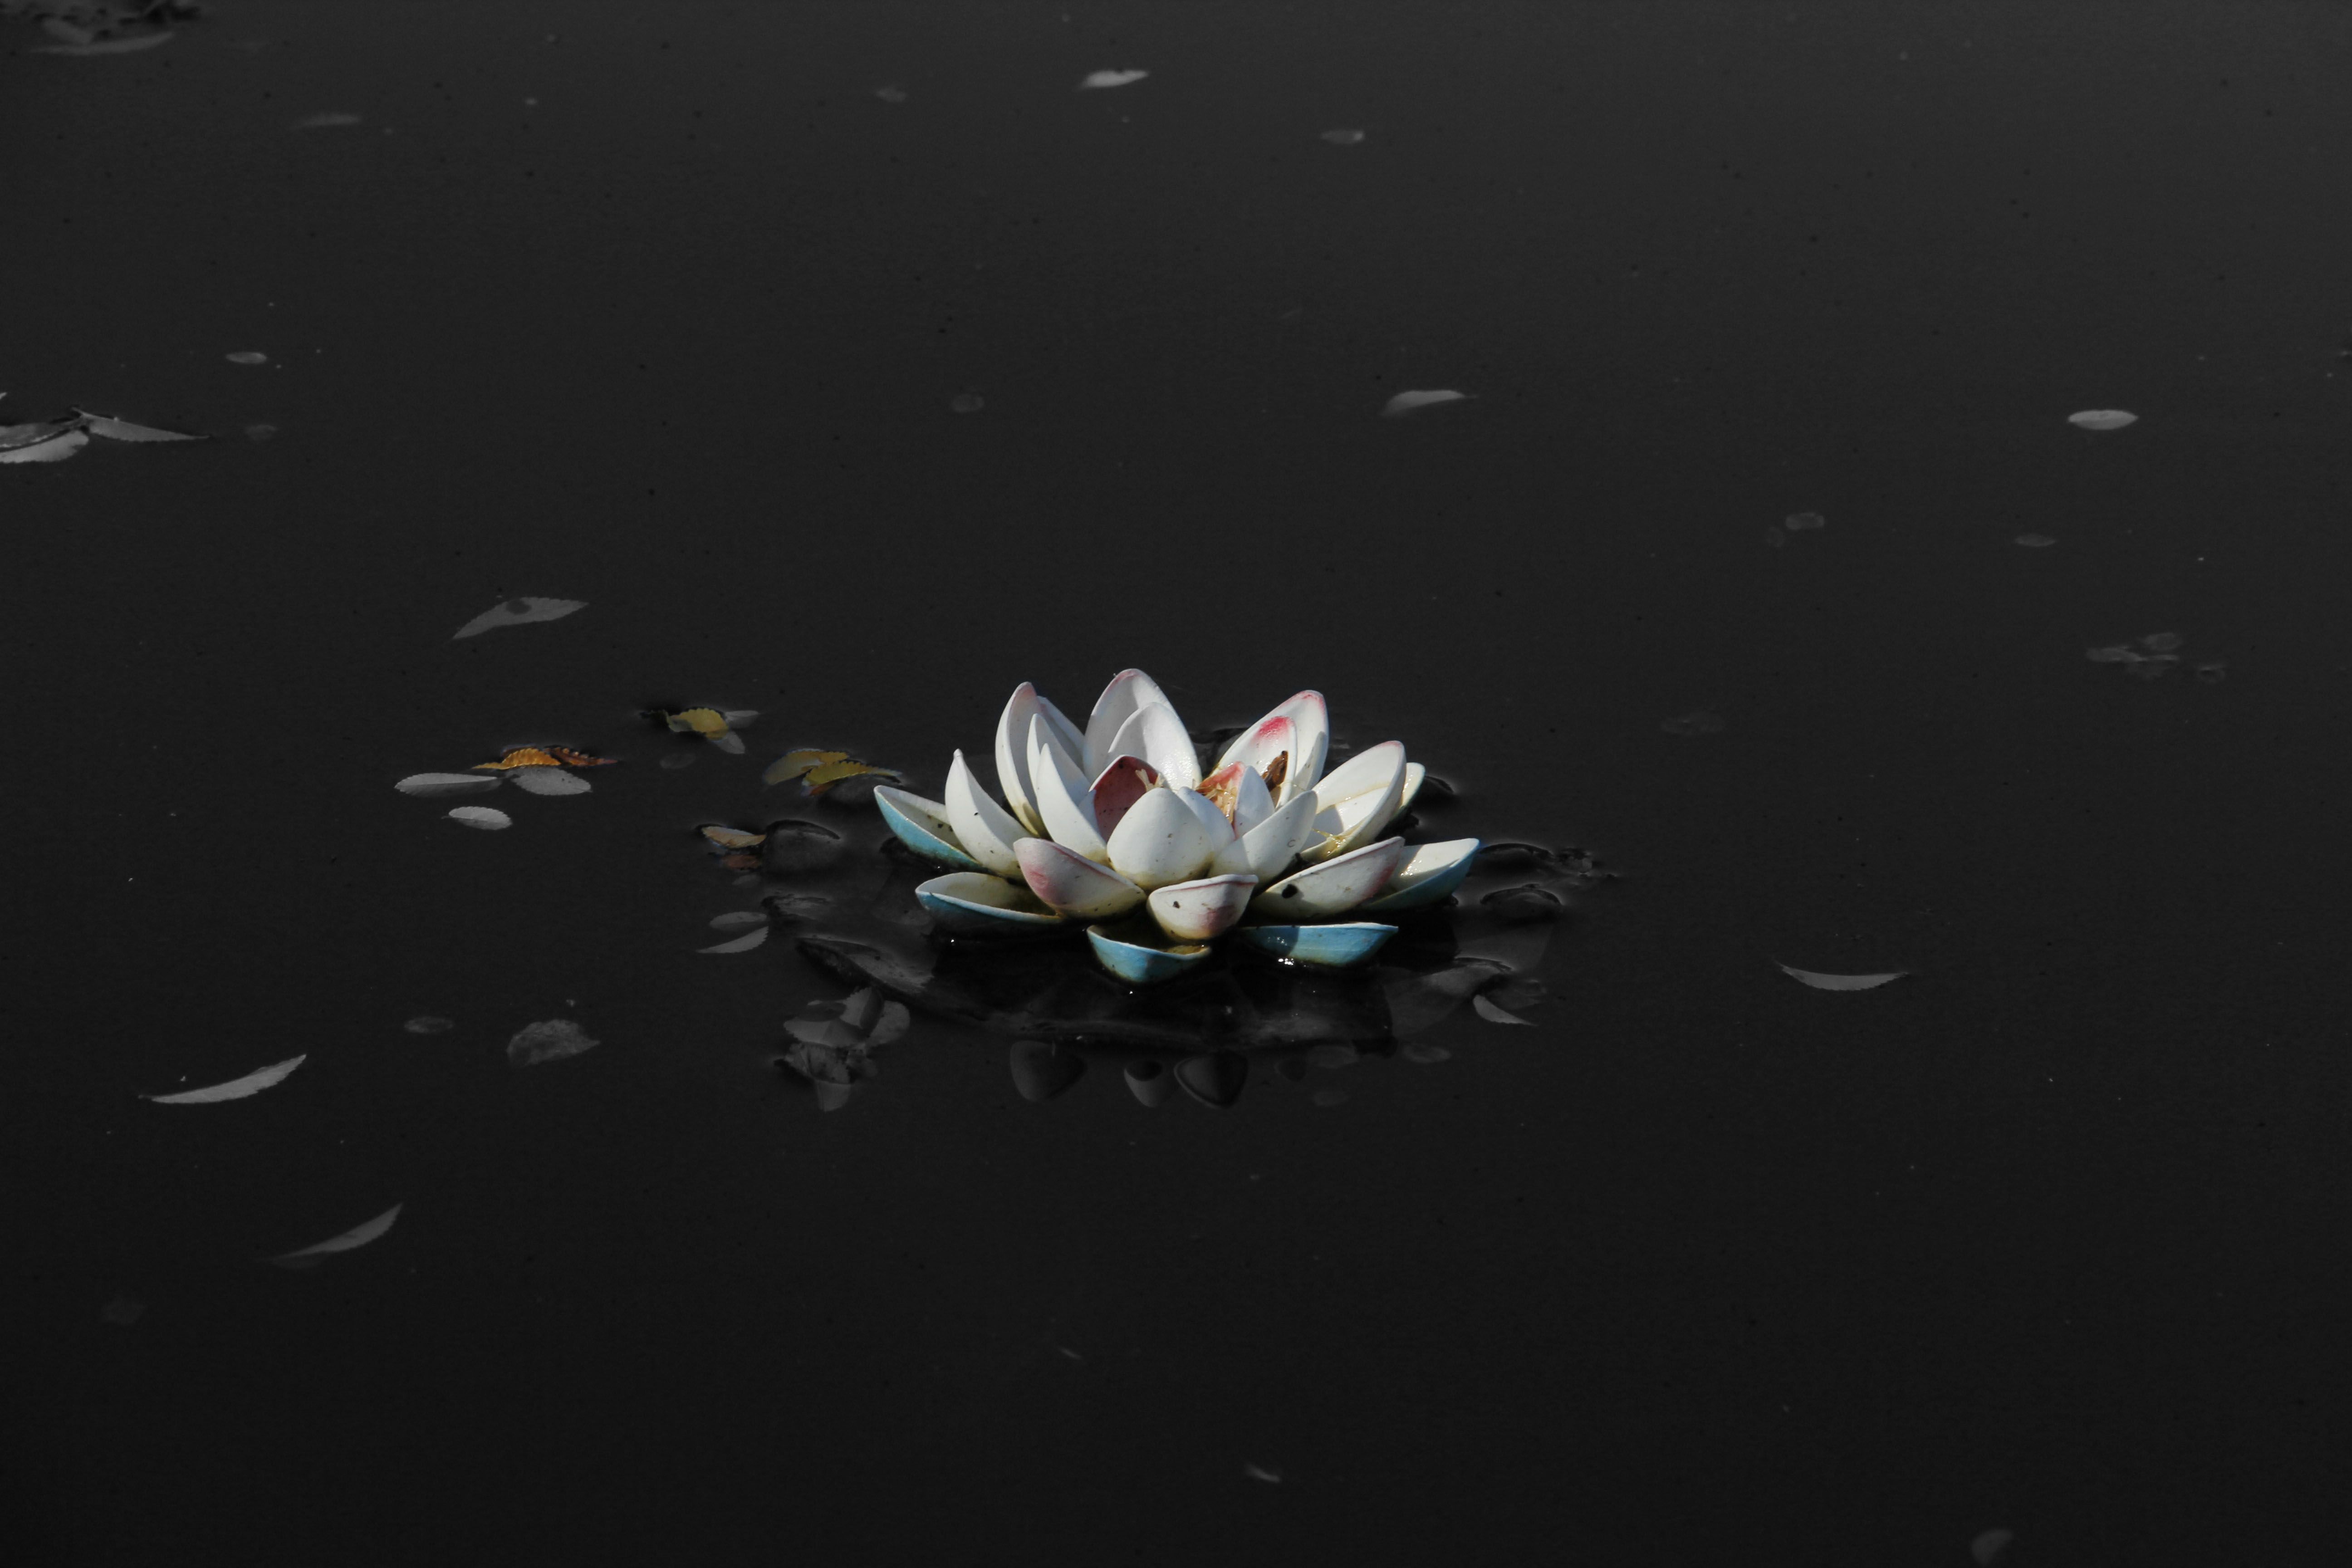 Black Lotus Flower Wallpaper HD Resolution. Flower wallpaper, Blue flower wallpaper, Lotus flower wallpaper